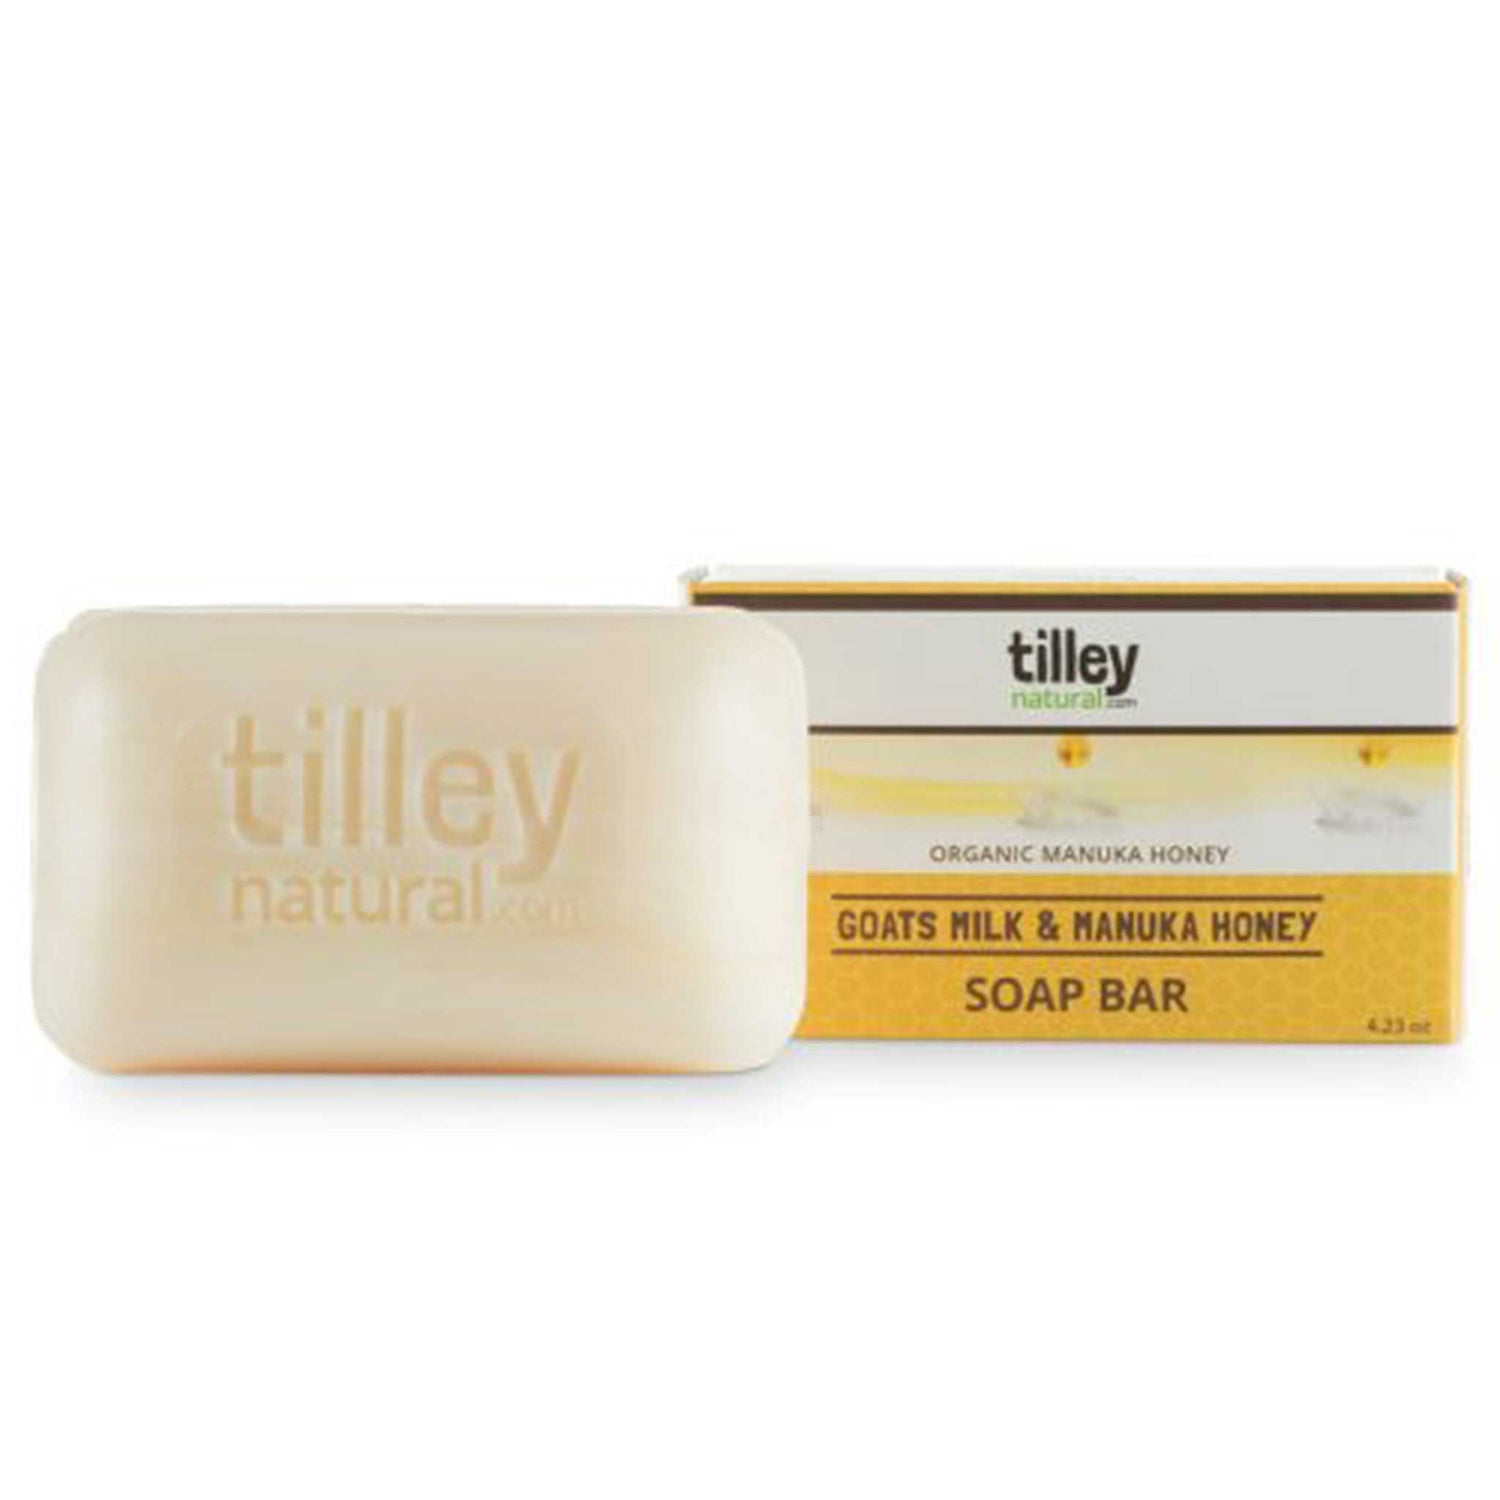 Tilley Natural